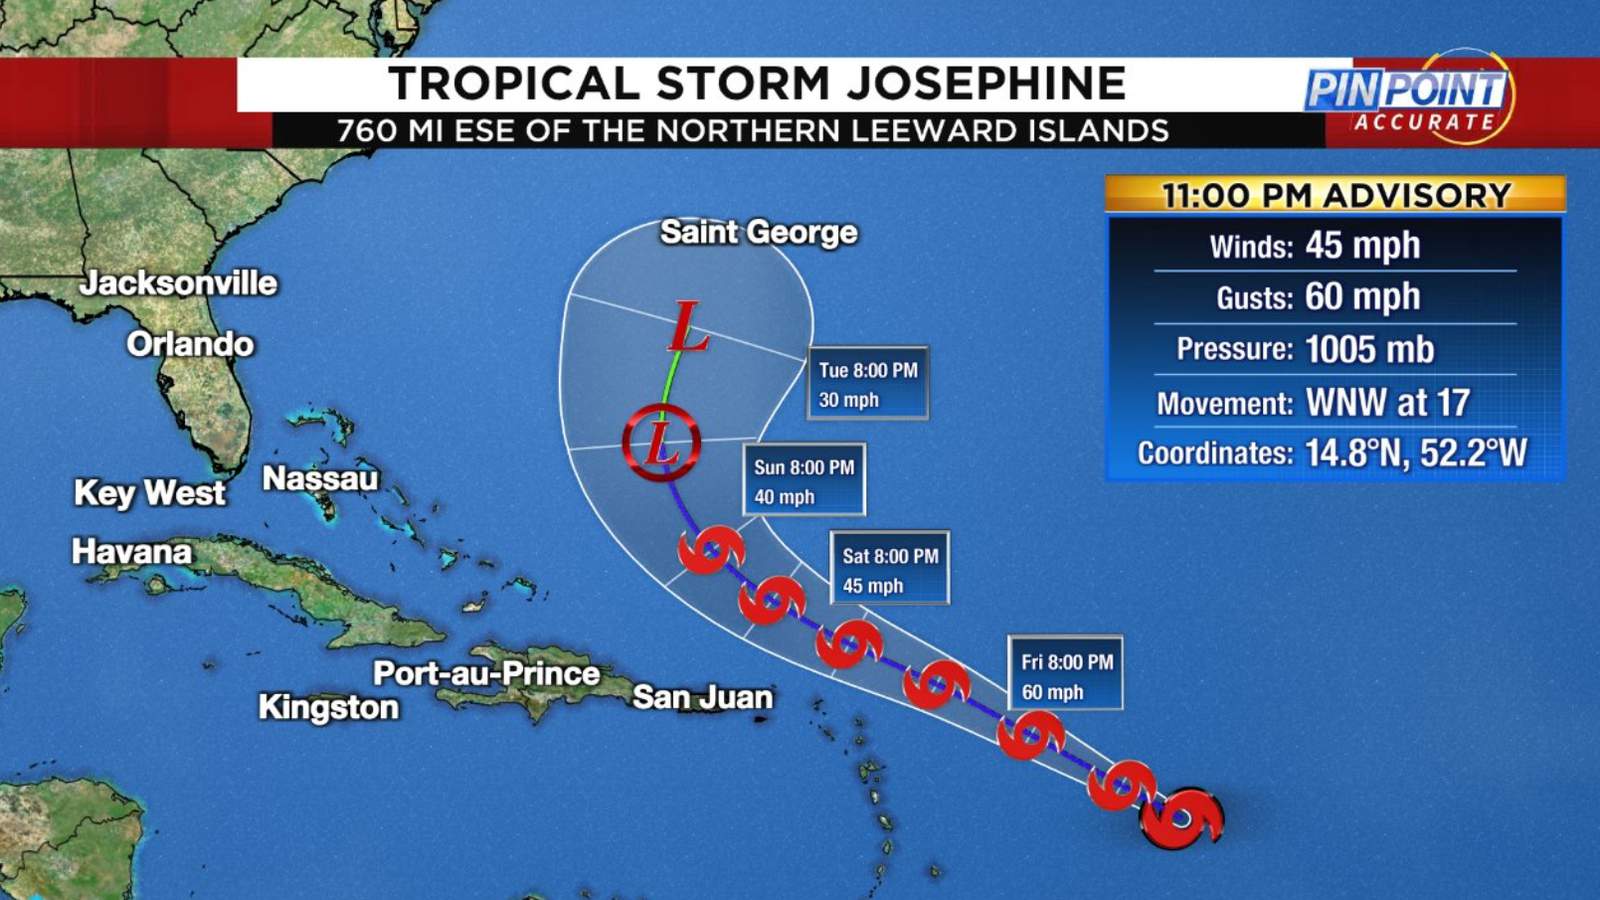 LIVE TRACK: Tropical Storm Josephine forecast cone, computer models, updates